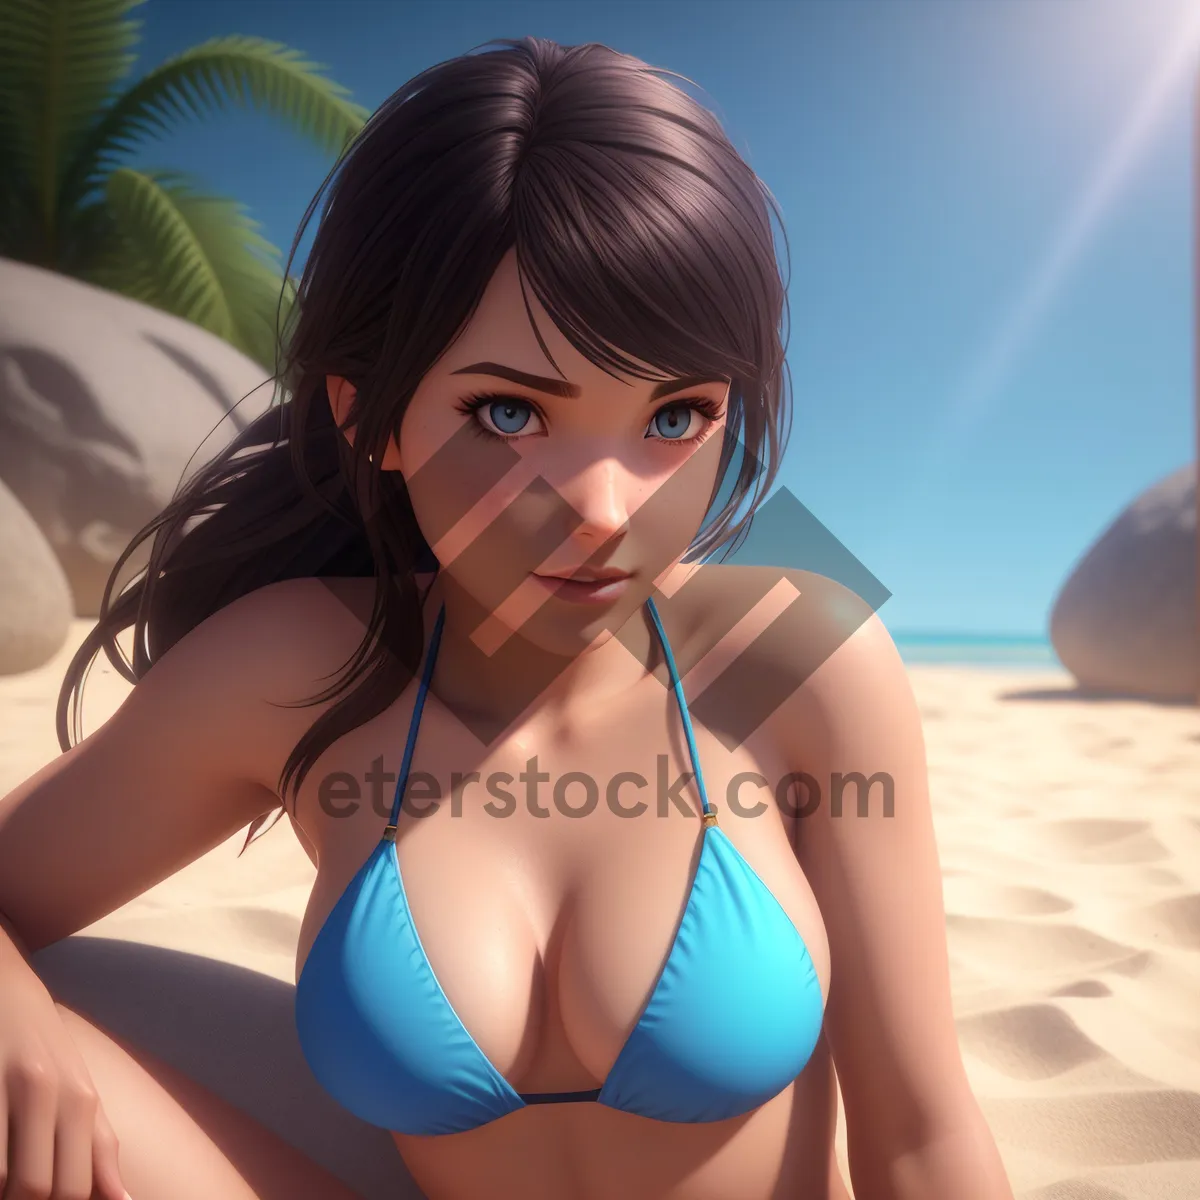 Picture of Beach Chic: Stunning Brunette in Sensual Bikini